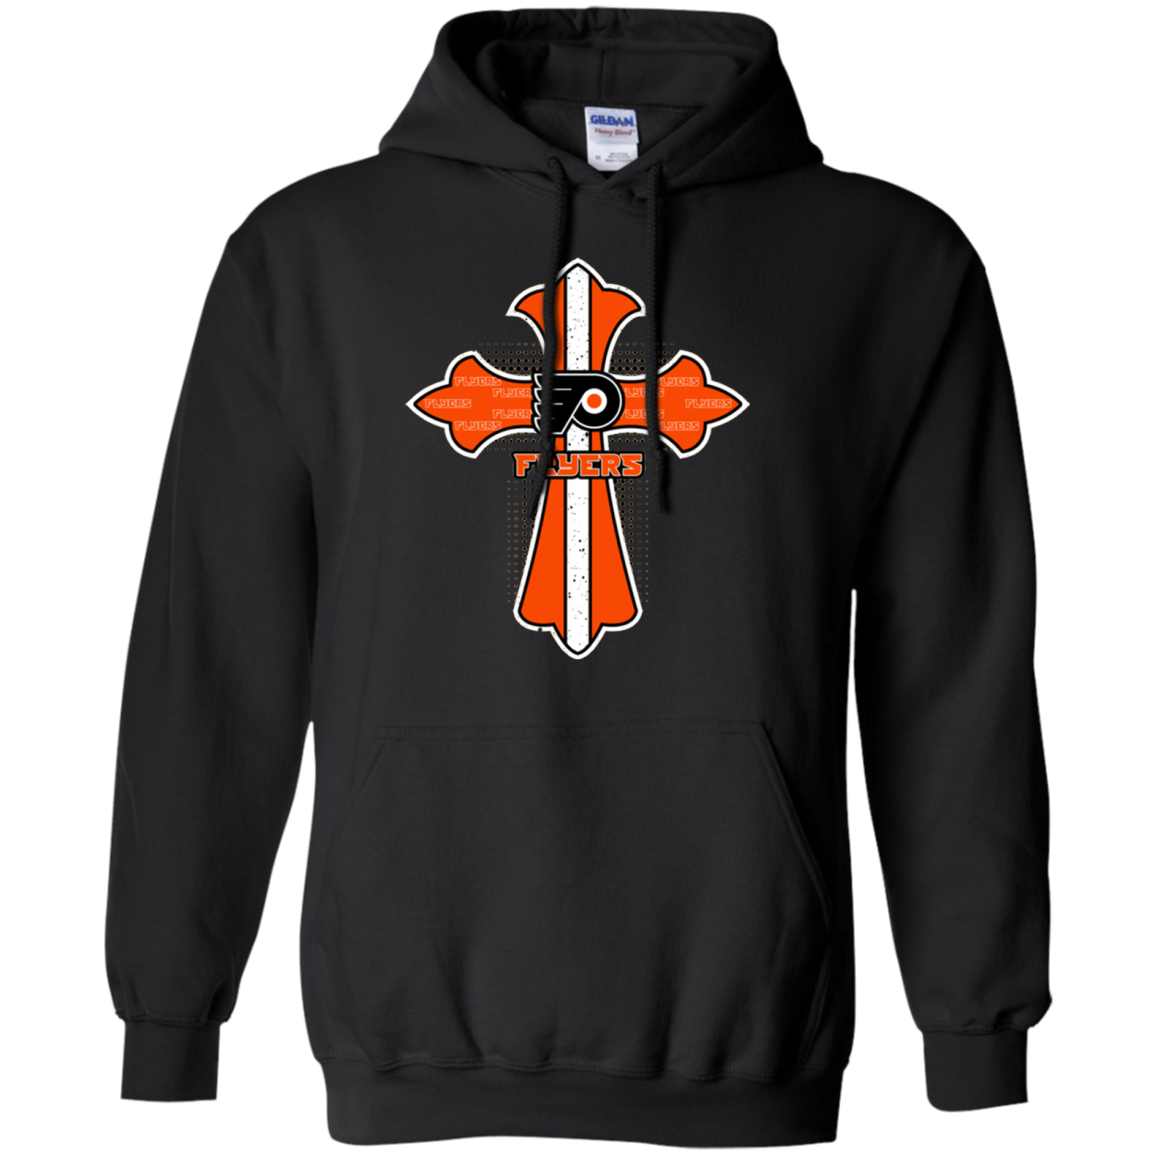 Cross Shirt For Jesus And Philadelphia Flyers Fans Shirt